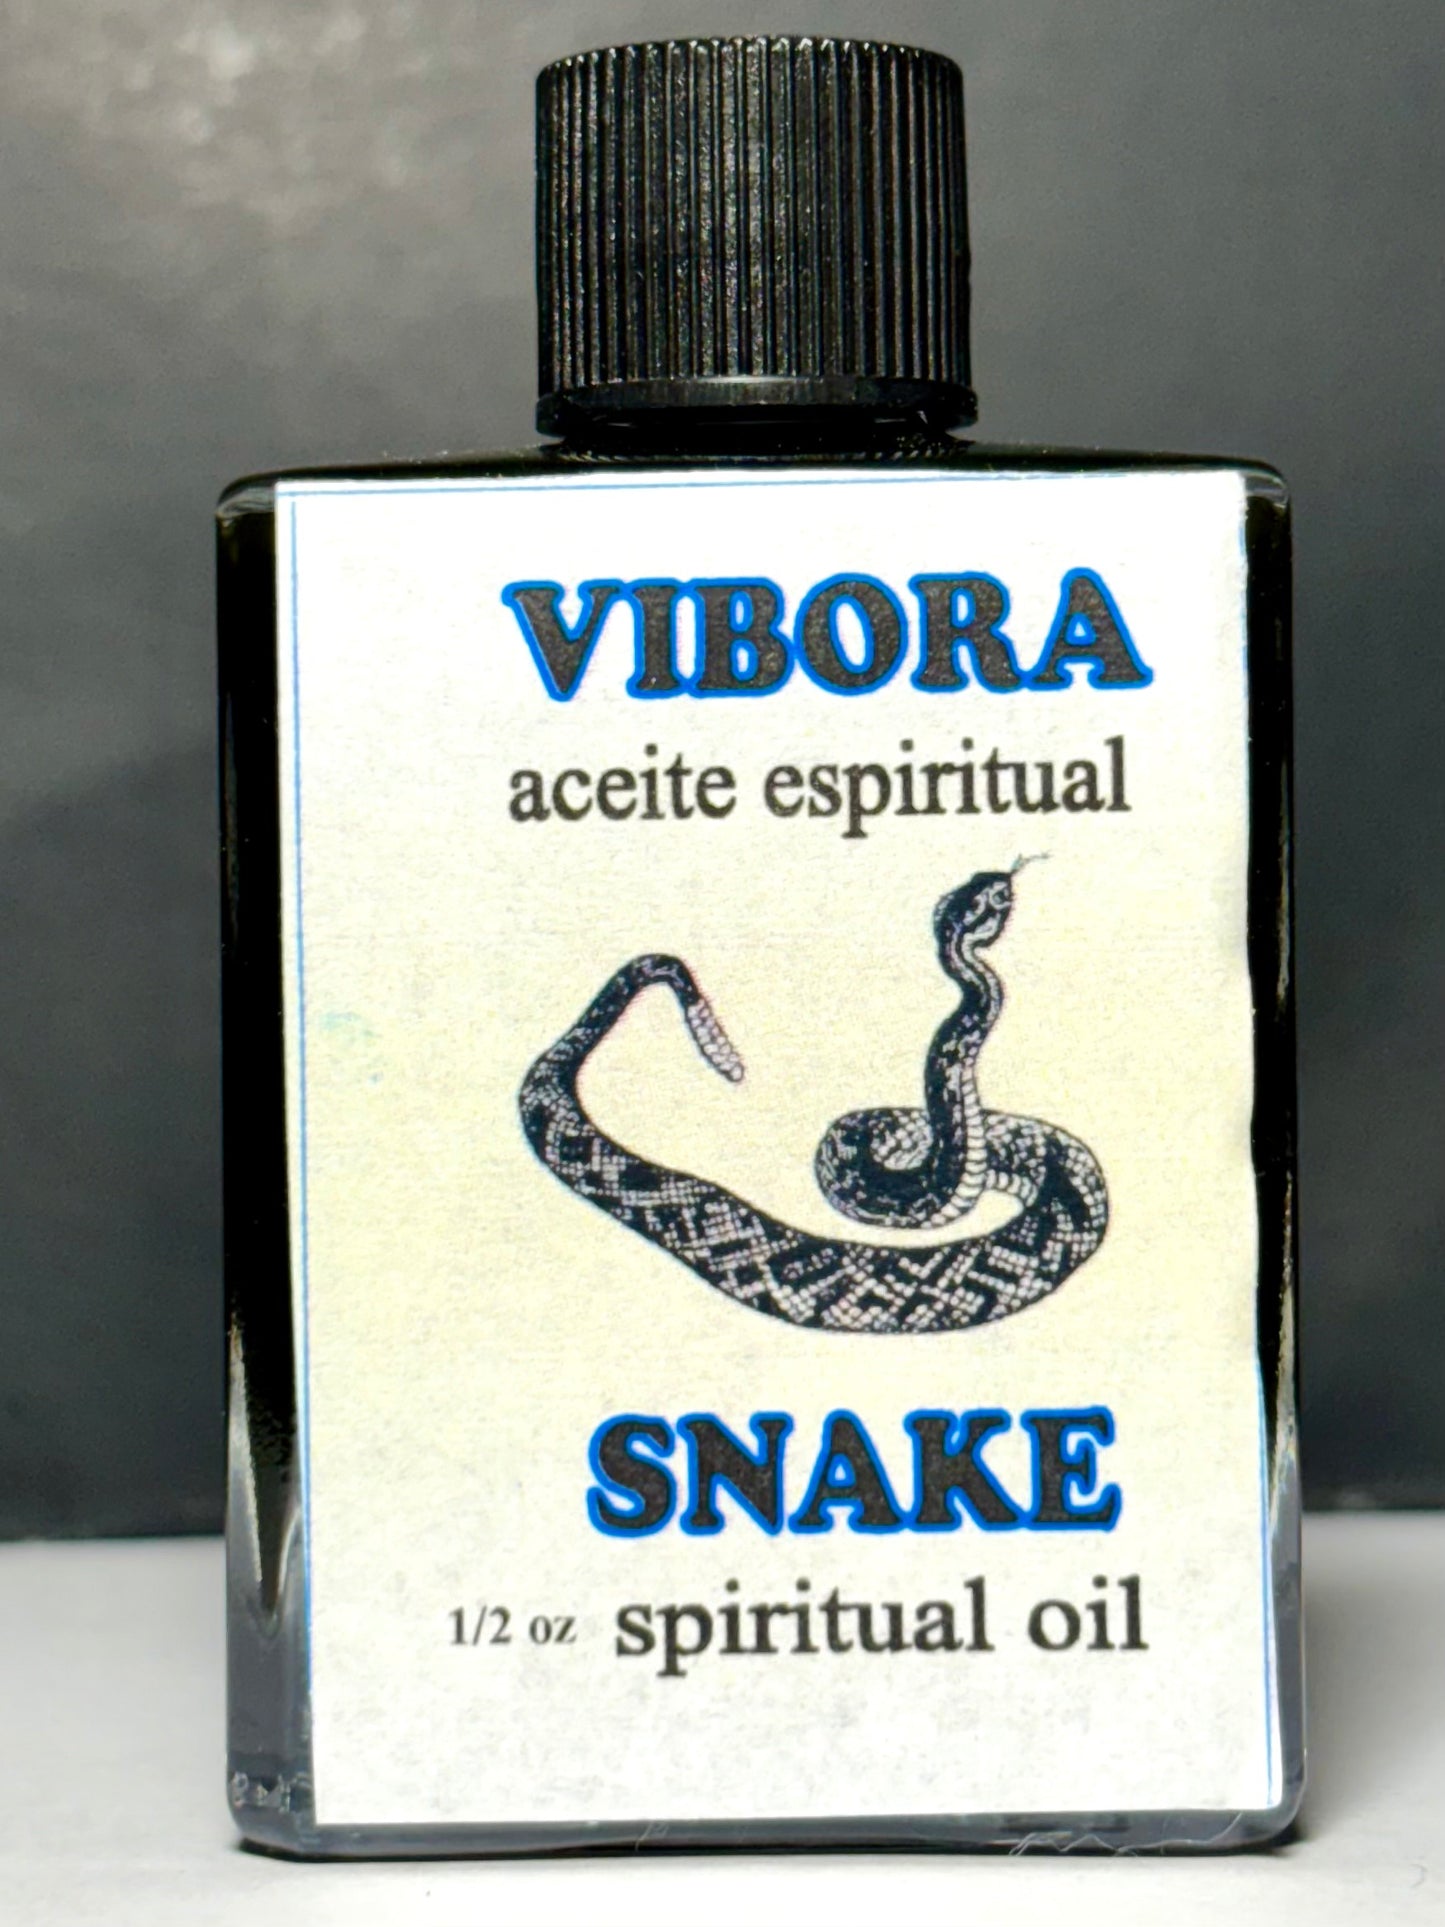 Vibora - Snake